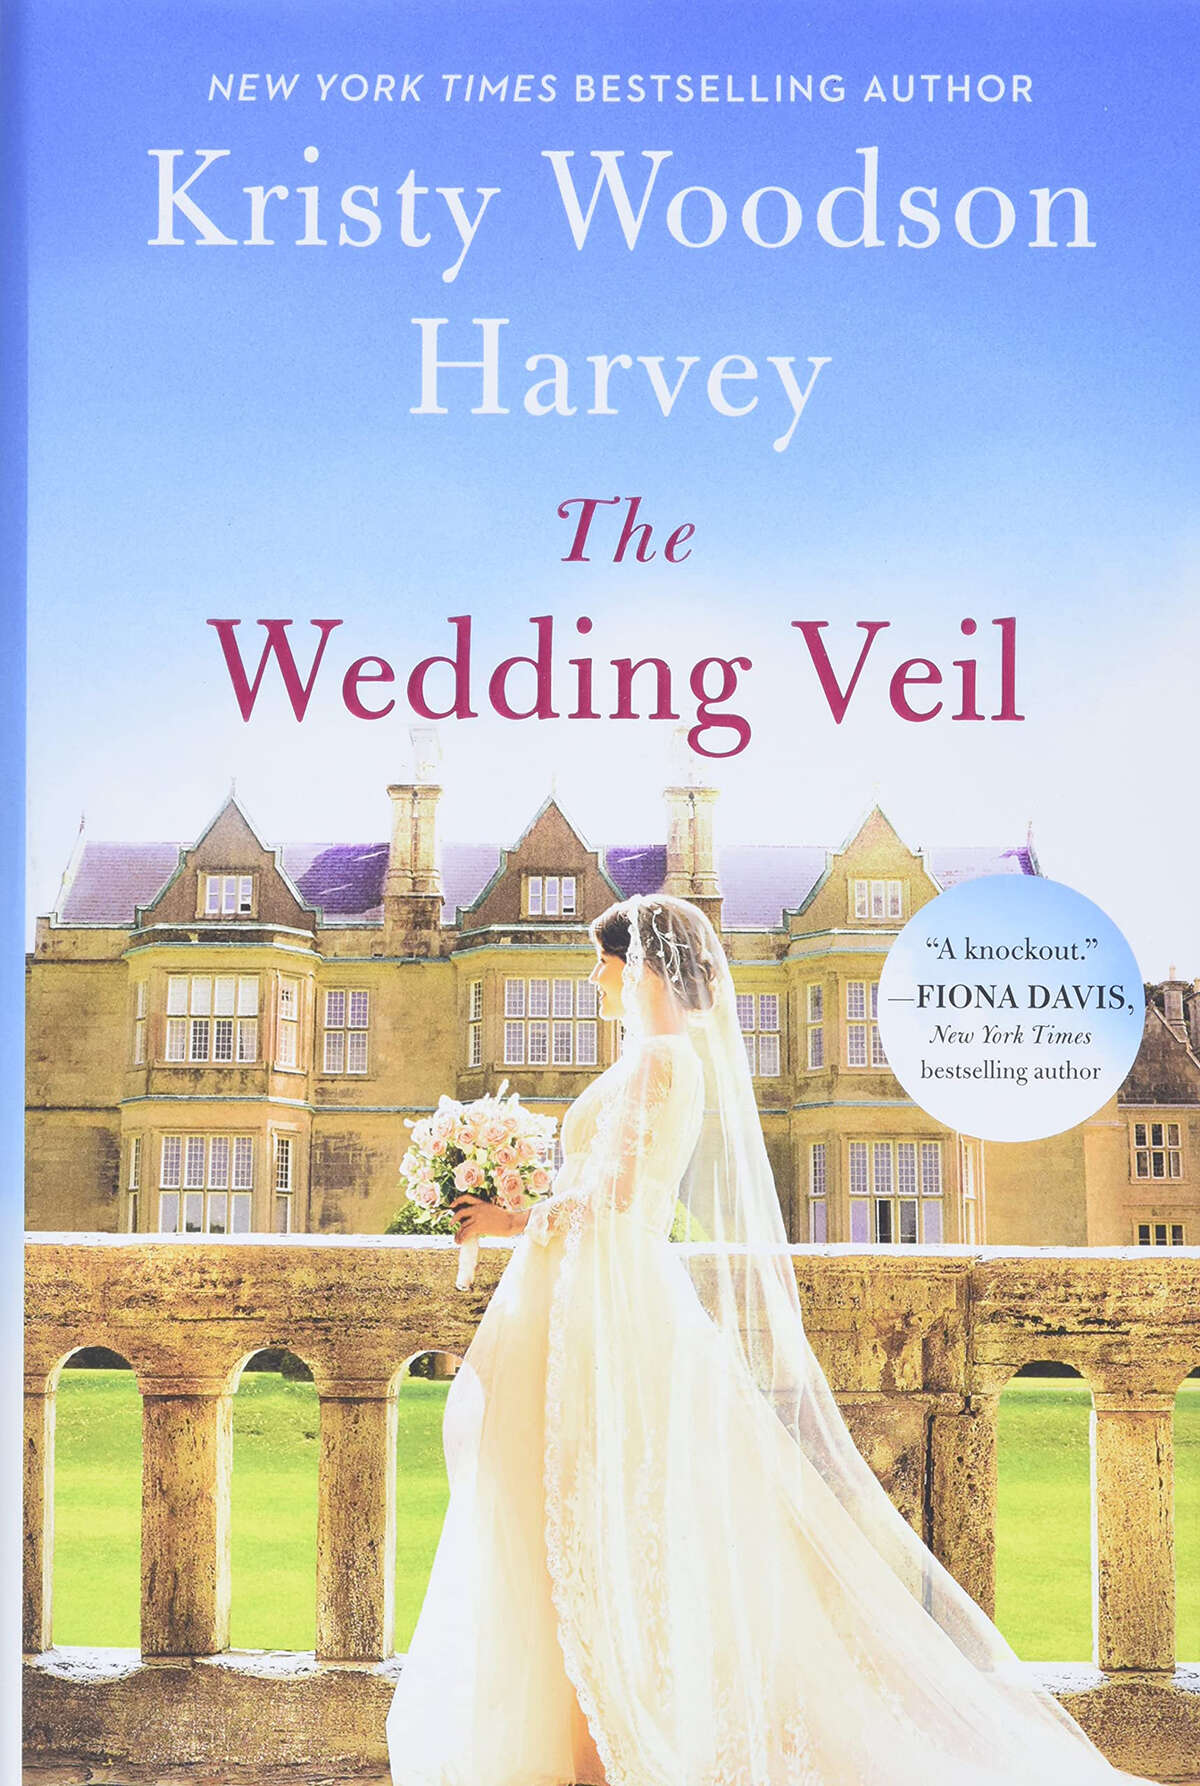 "The Wedding Veil"